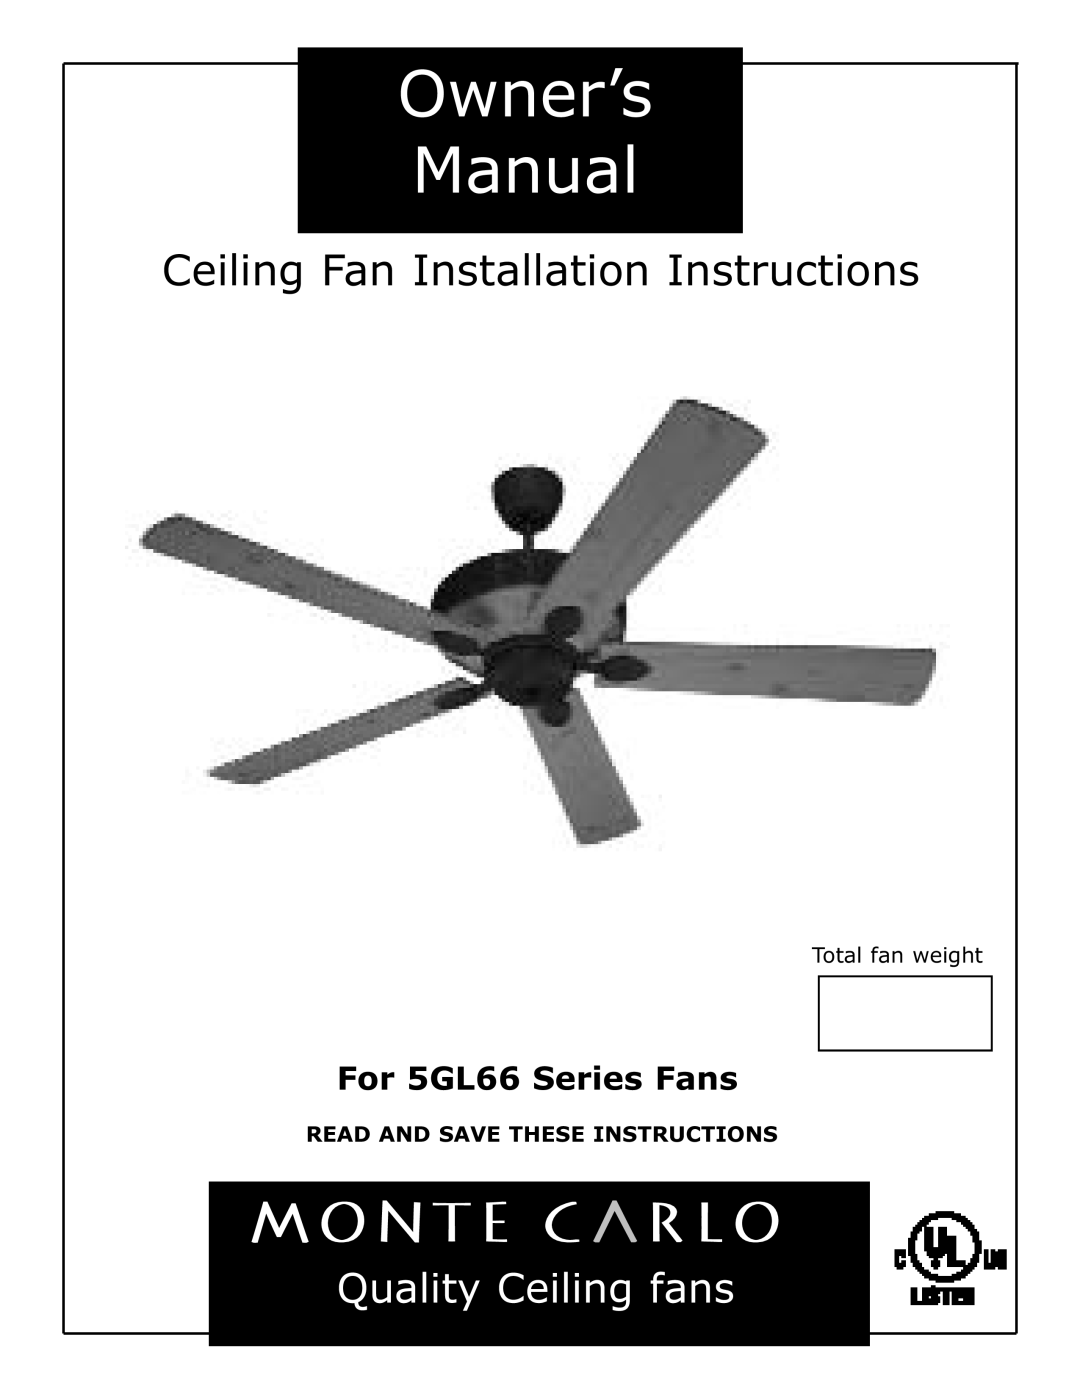 Monte Carlo Fan Company 5GL66 Series owner manual Owner’s Manual, Ceiling Fan Installation Instructions, Total fan weight 